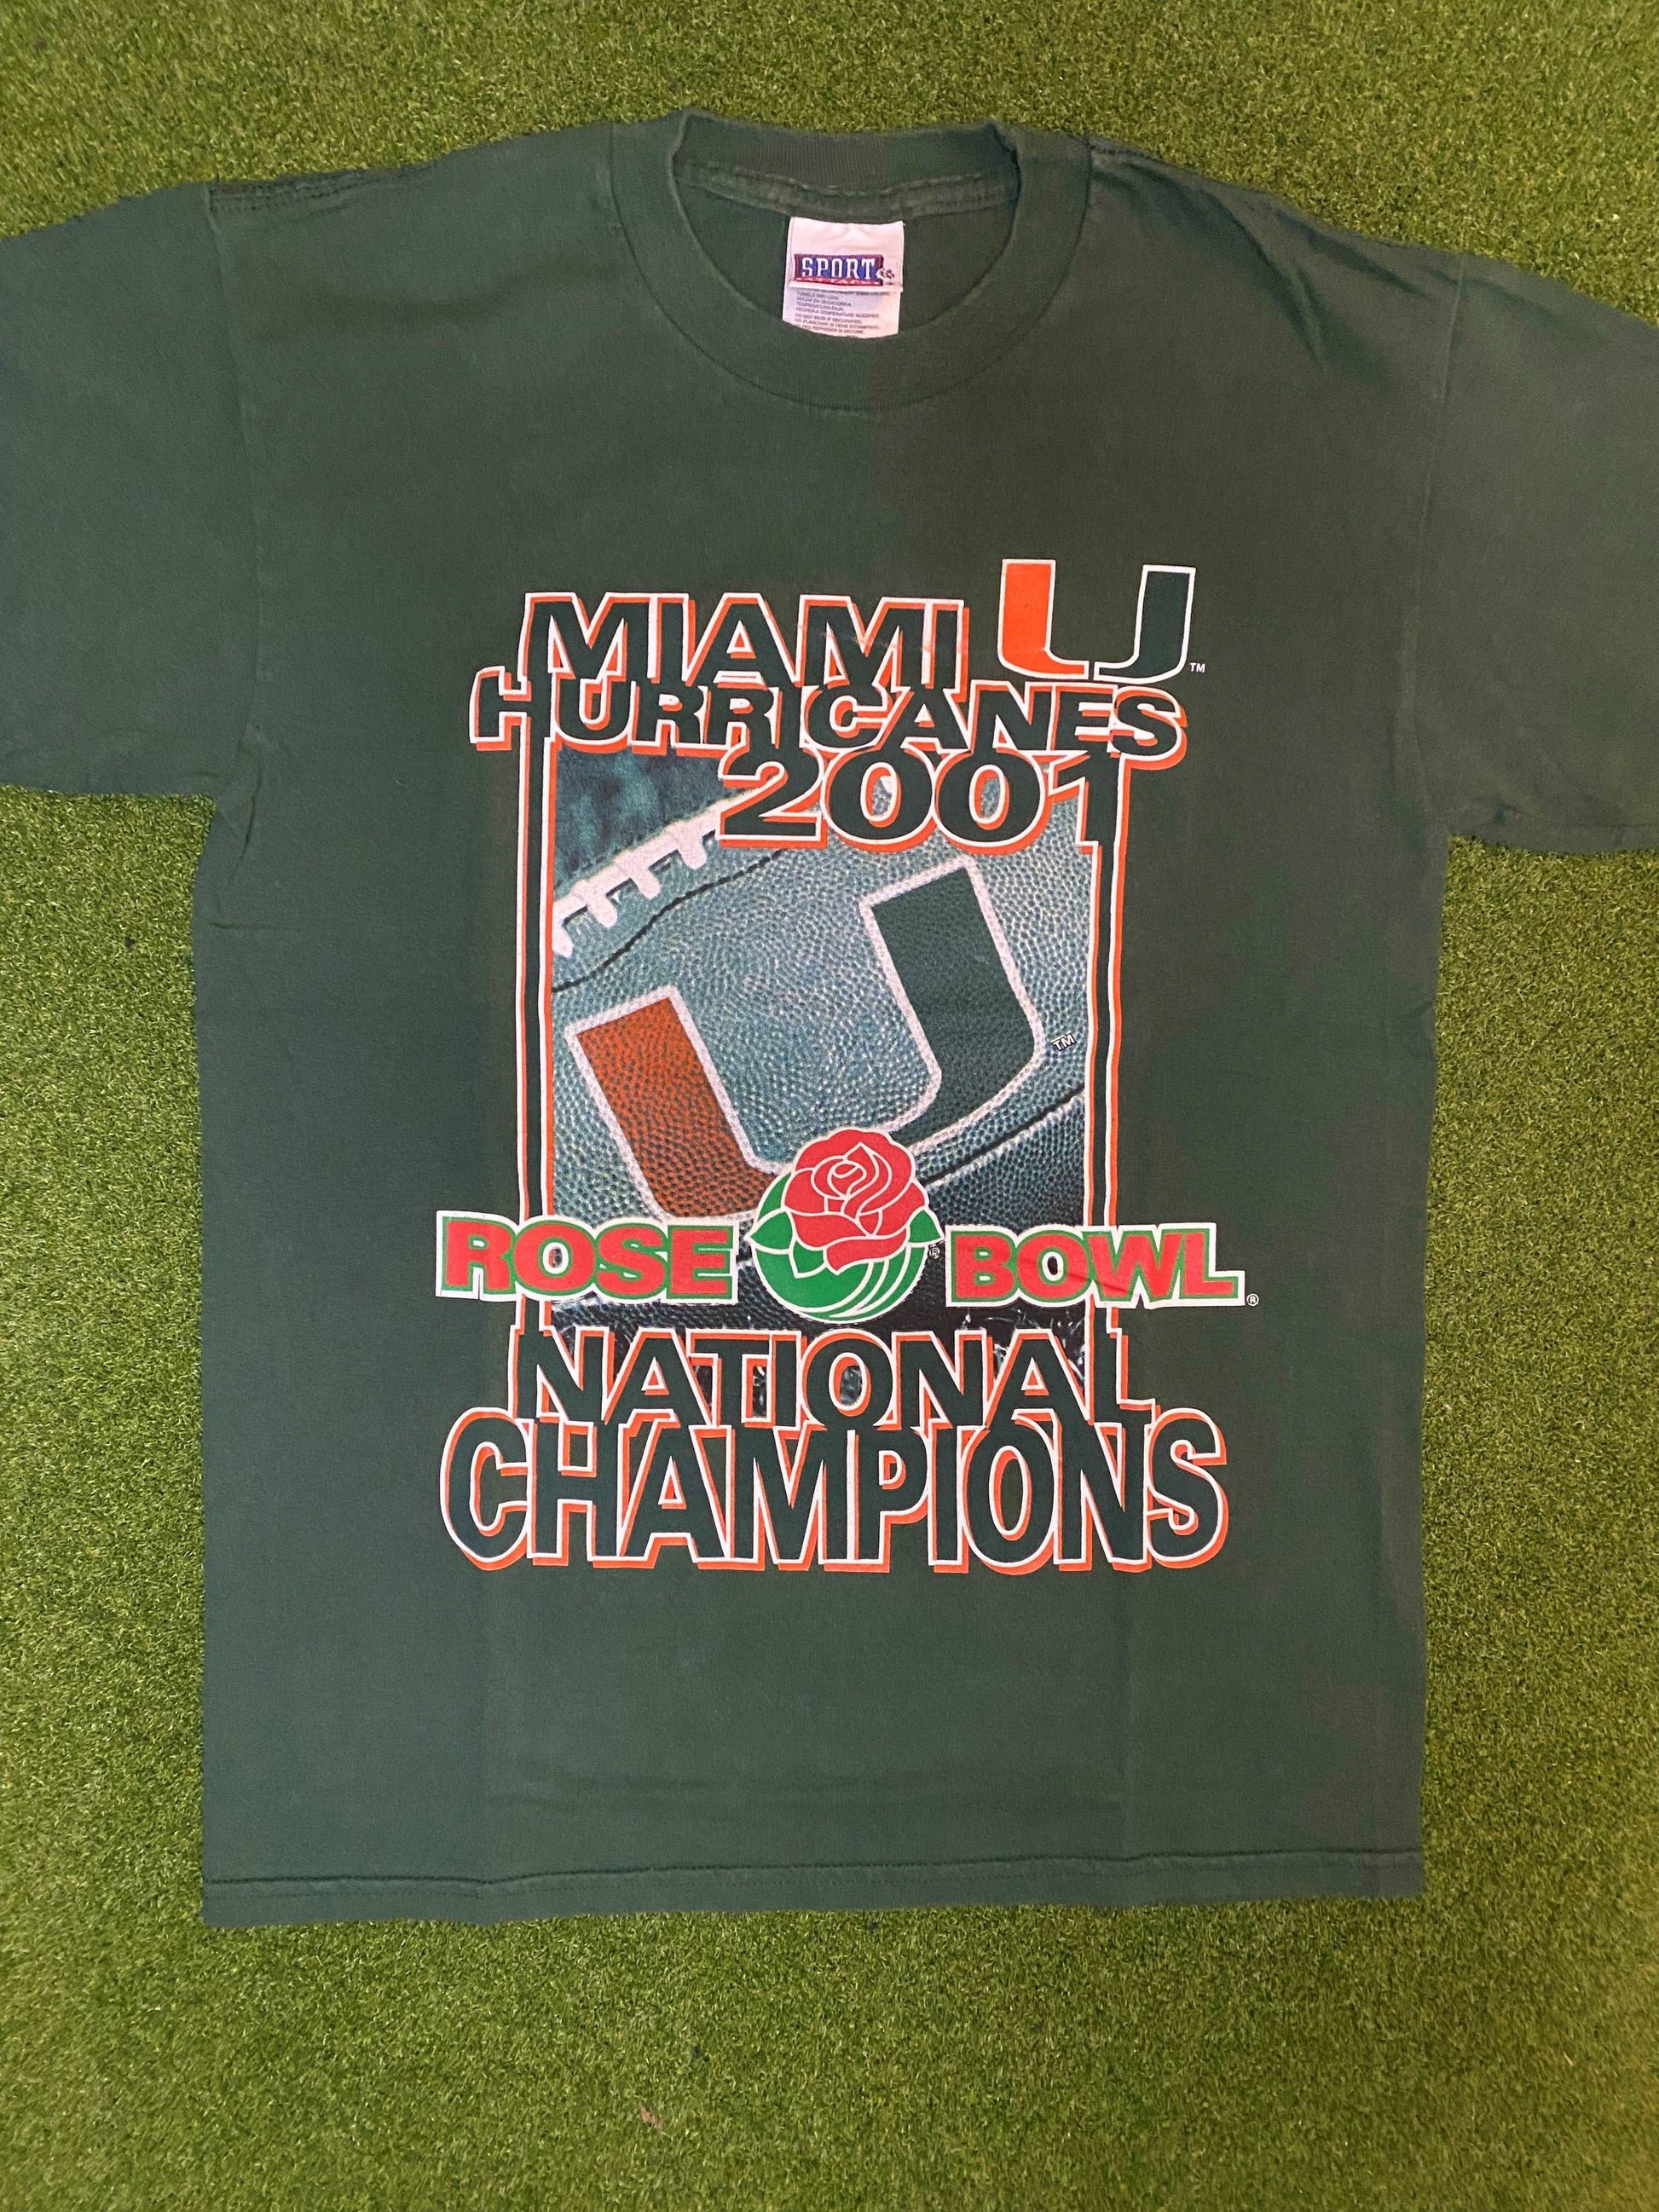 2001 Miami Hurricanes - National Champions - Vintage College Football Tee Shirt (Medium)